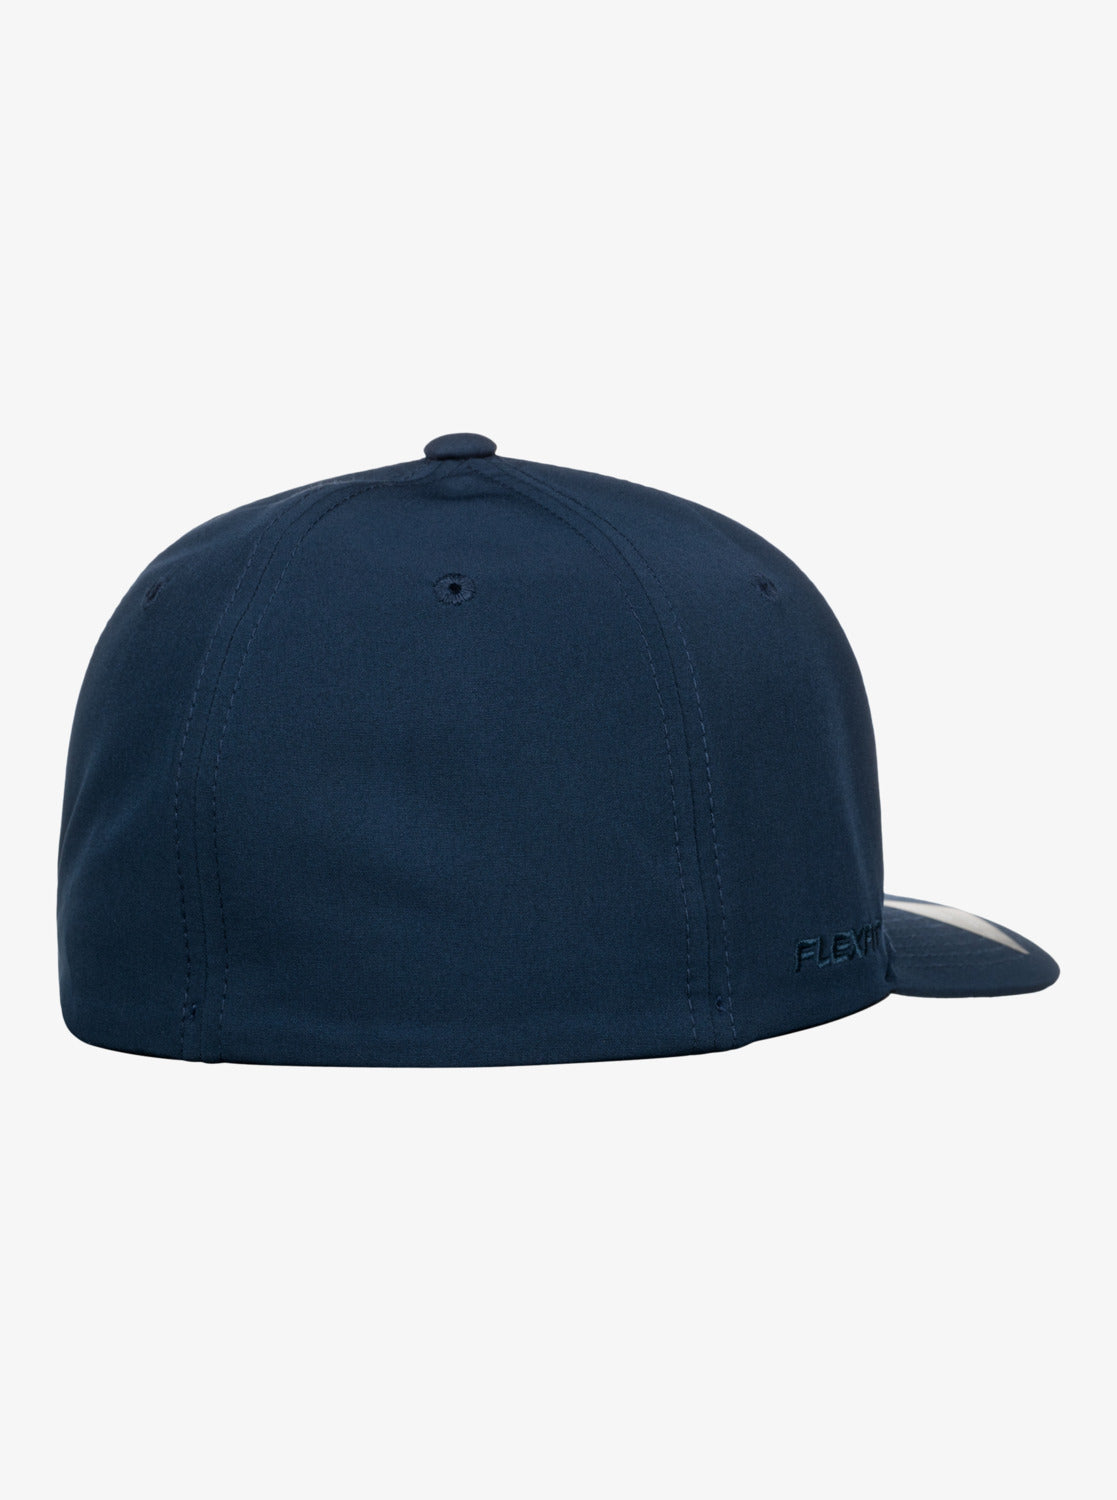 Amped Up Flexifit Hat - Navy Blazer